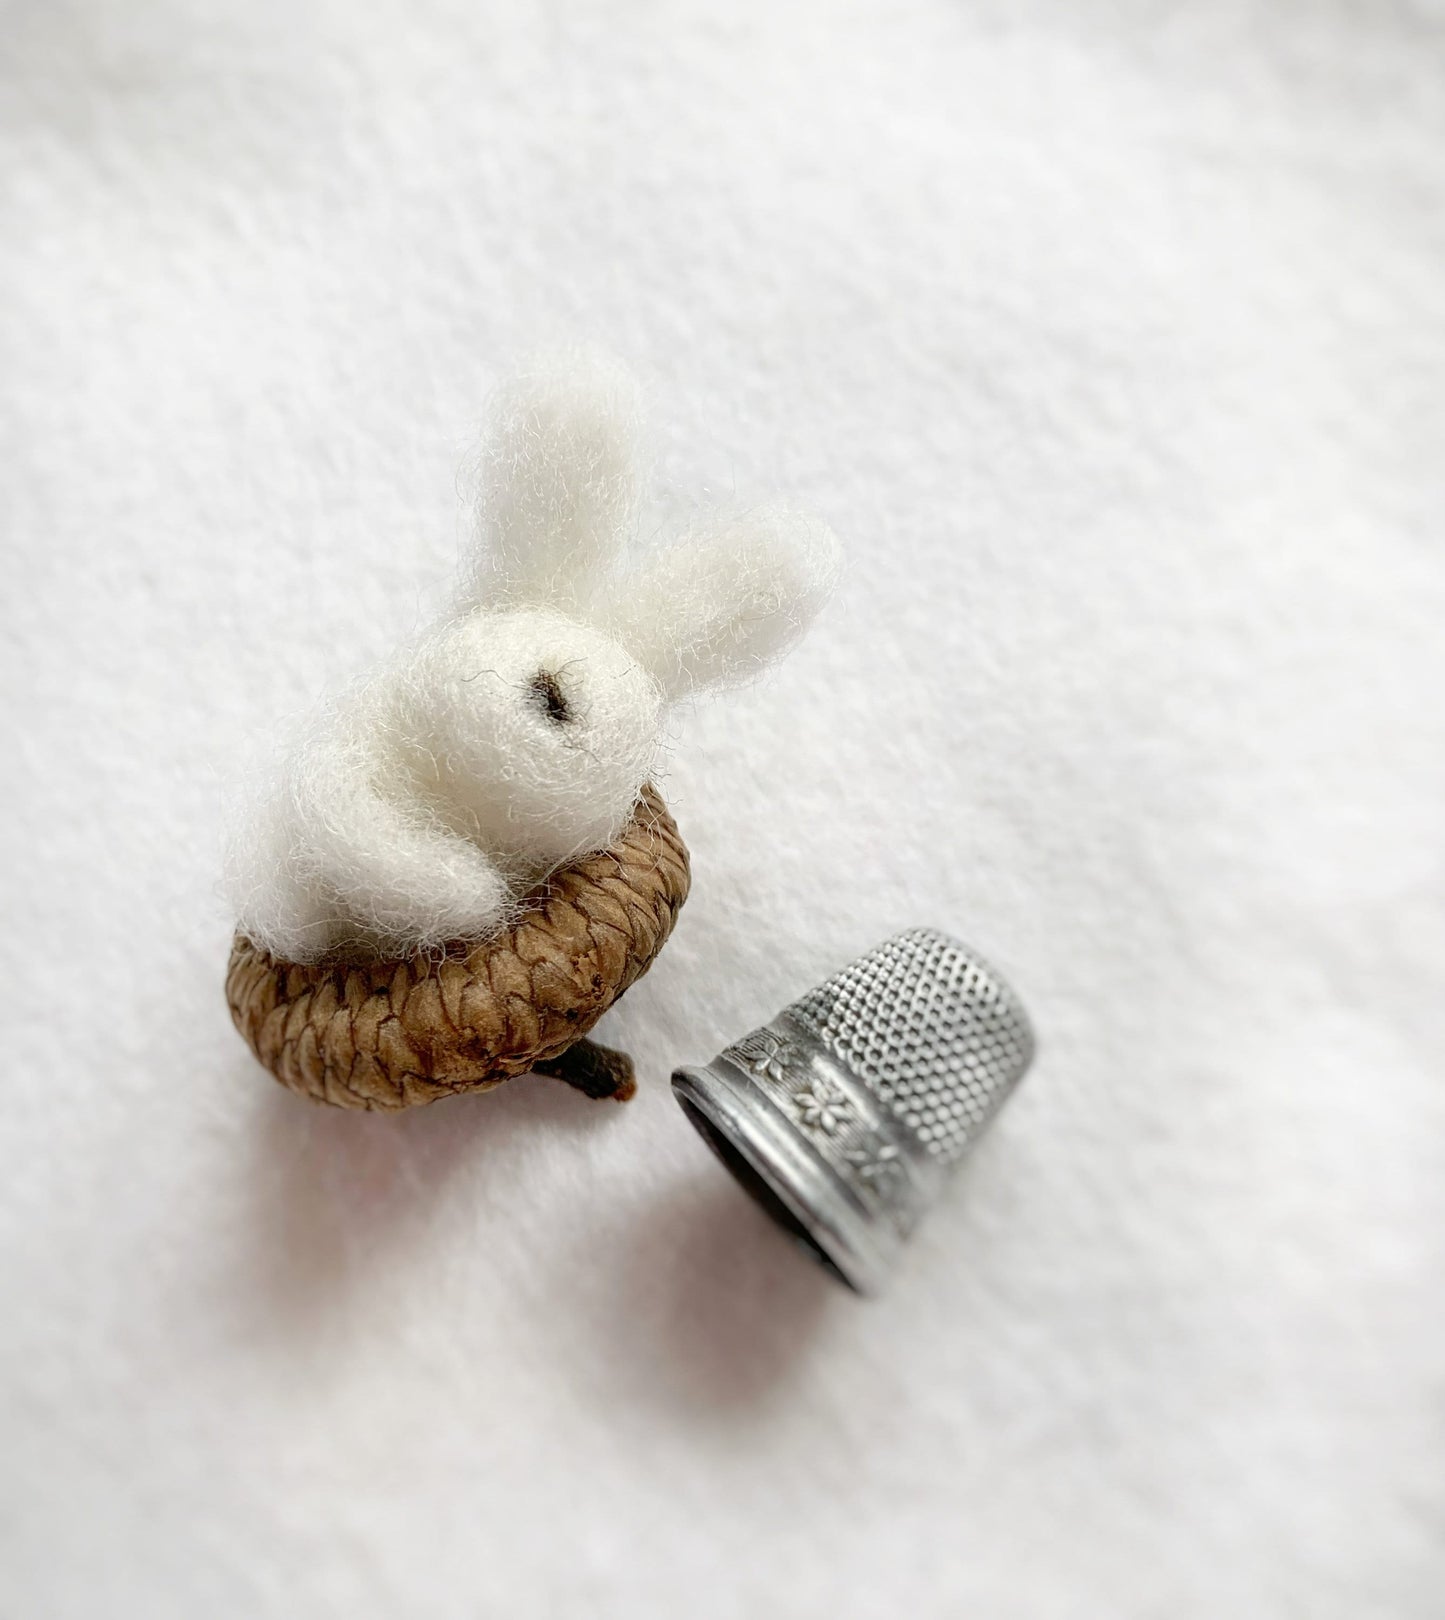 Sleeping White Bunny in Acorn Cap